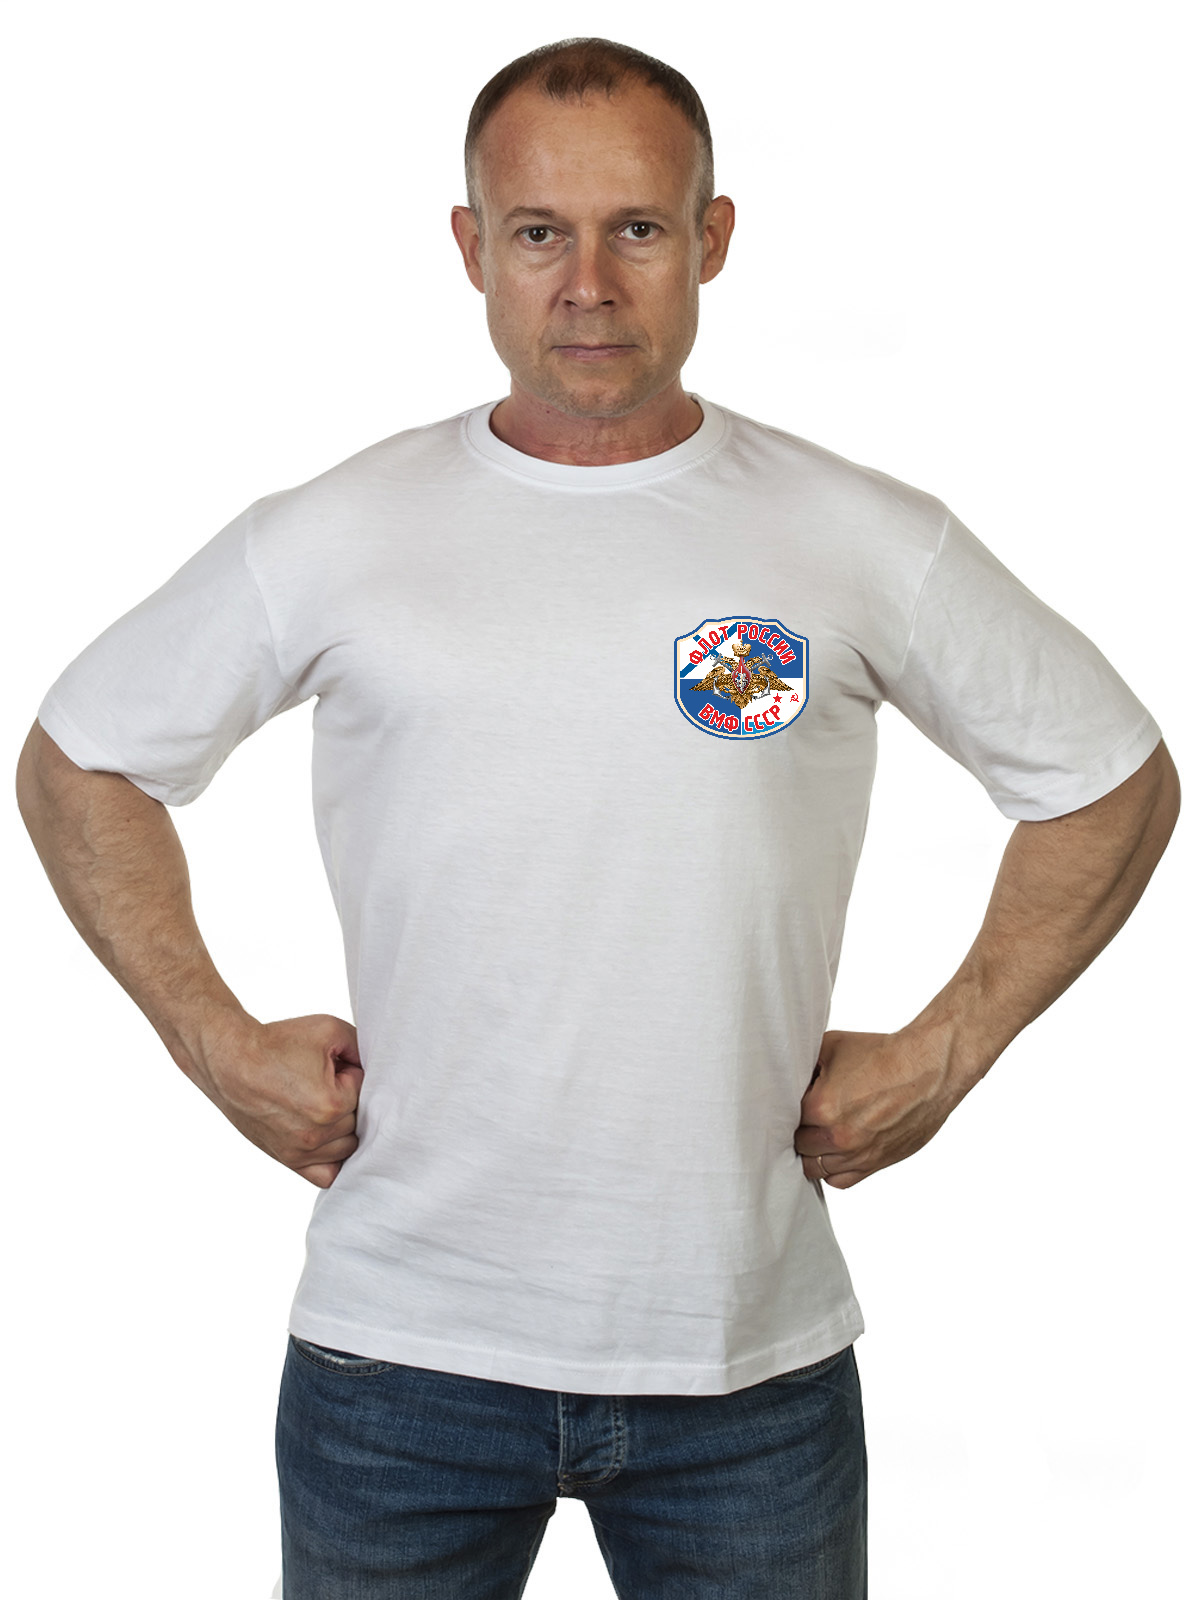 Белая футболка "Военно-Морской флот" на заказ